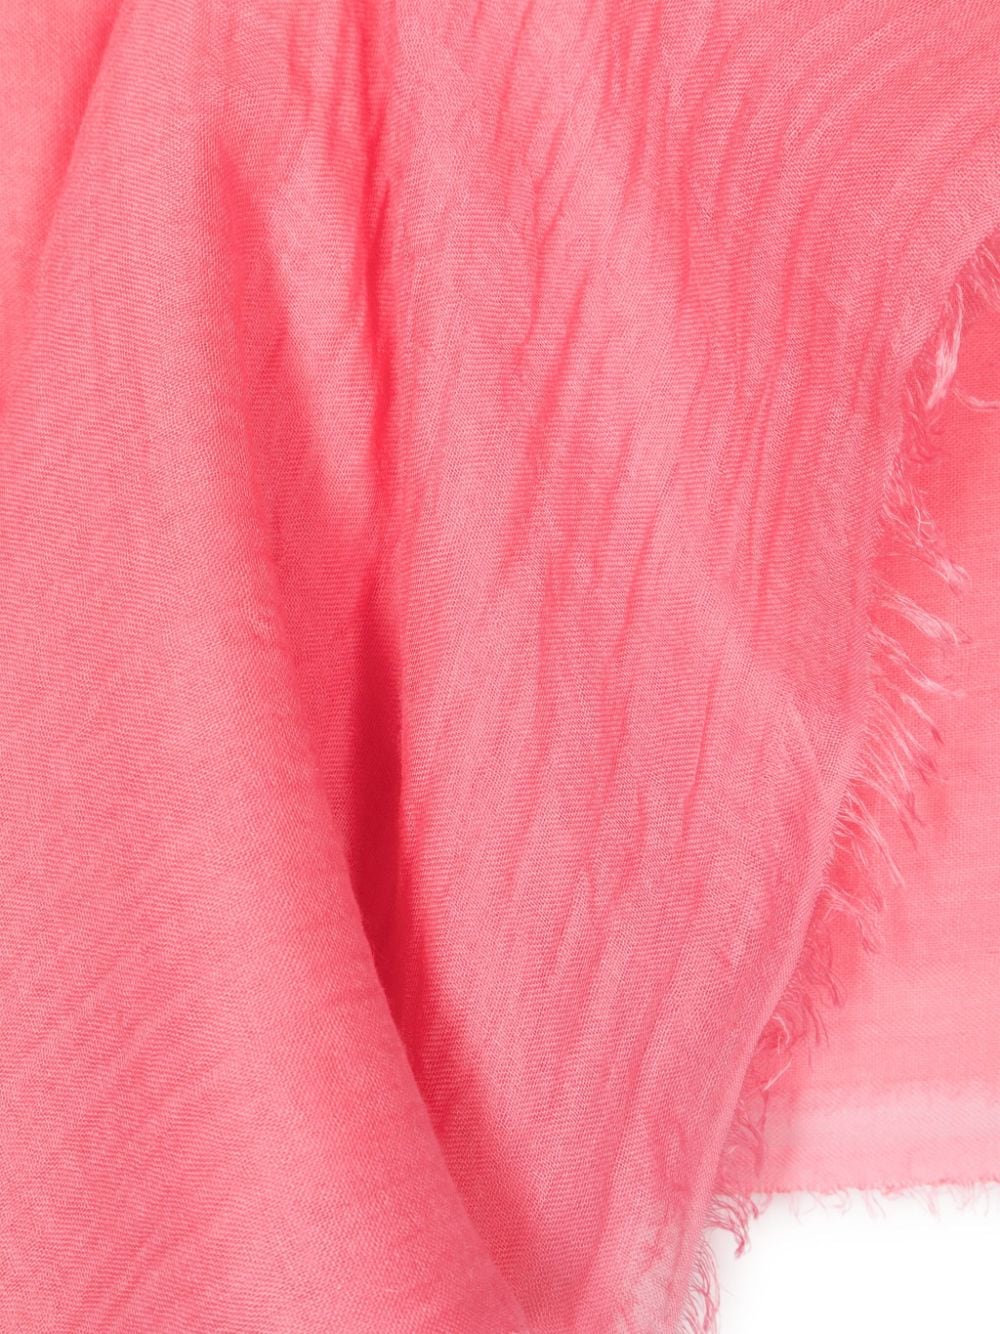 Faliero Sarti Tobia rechthoekige sjaal - Roze